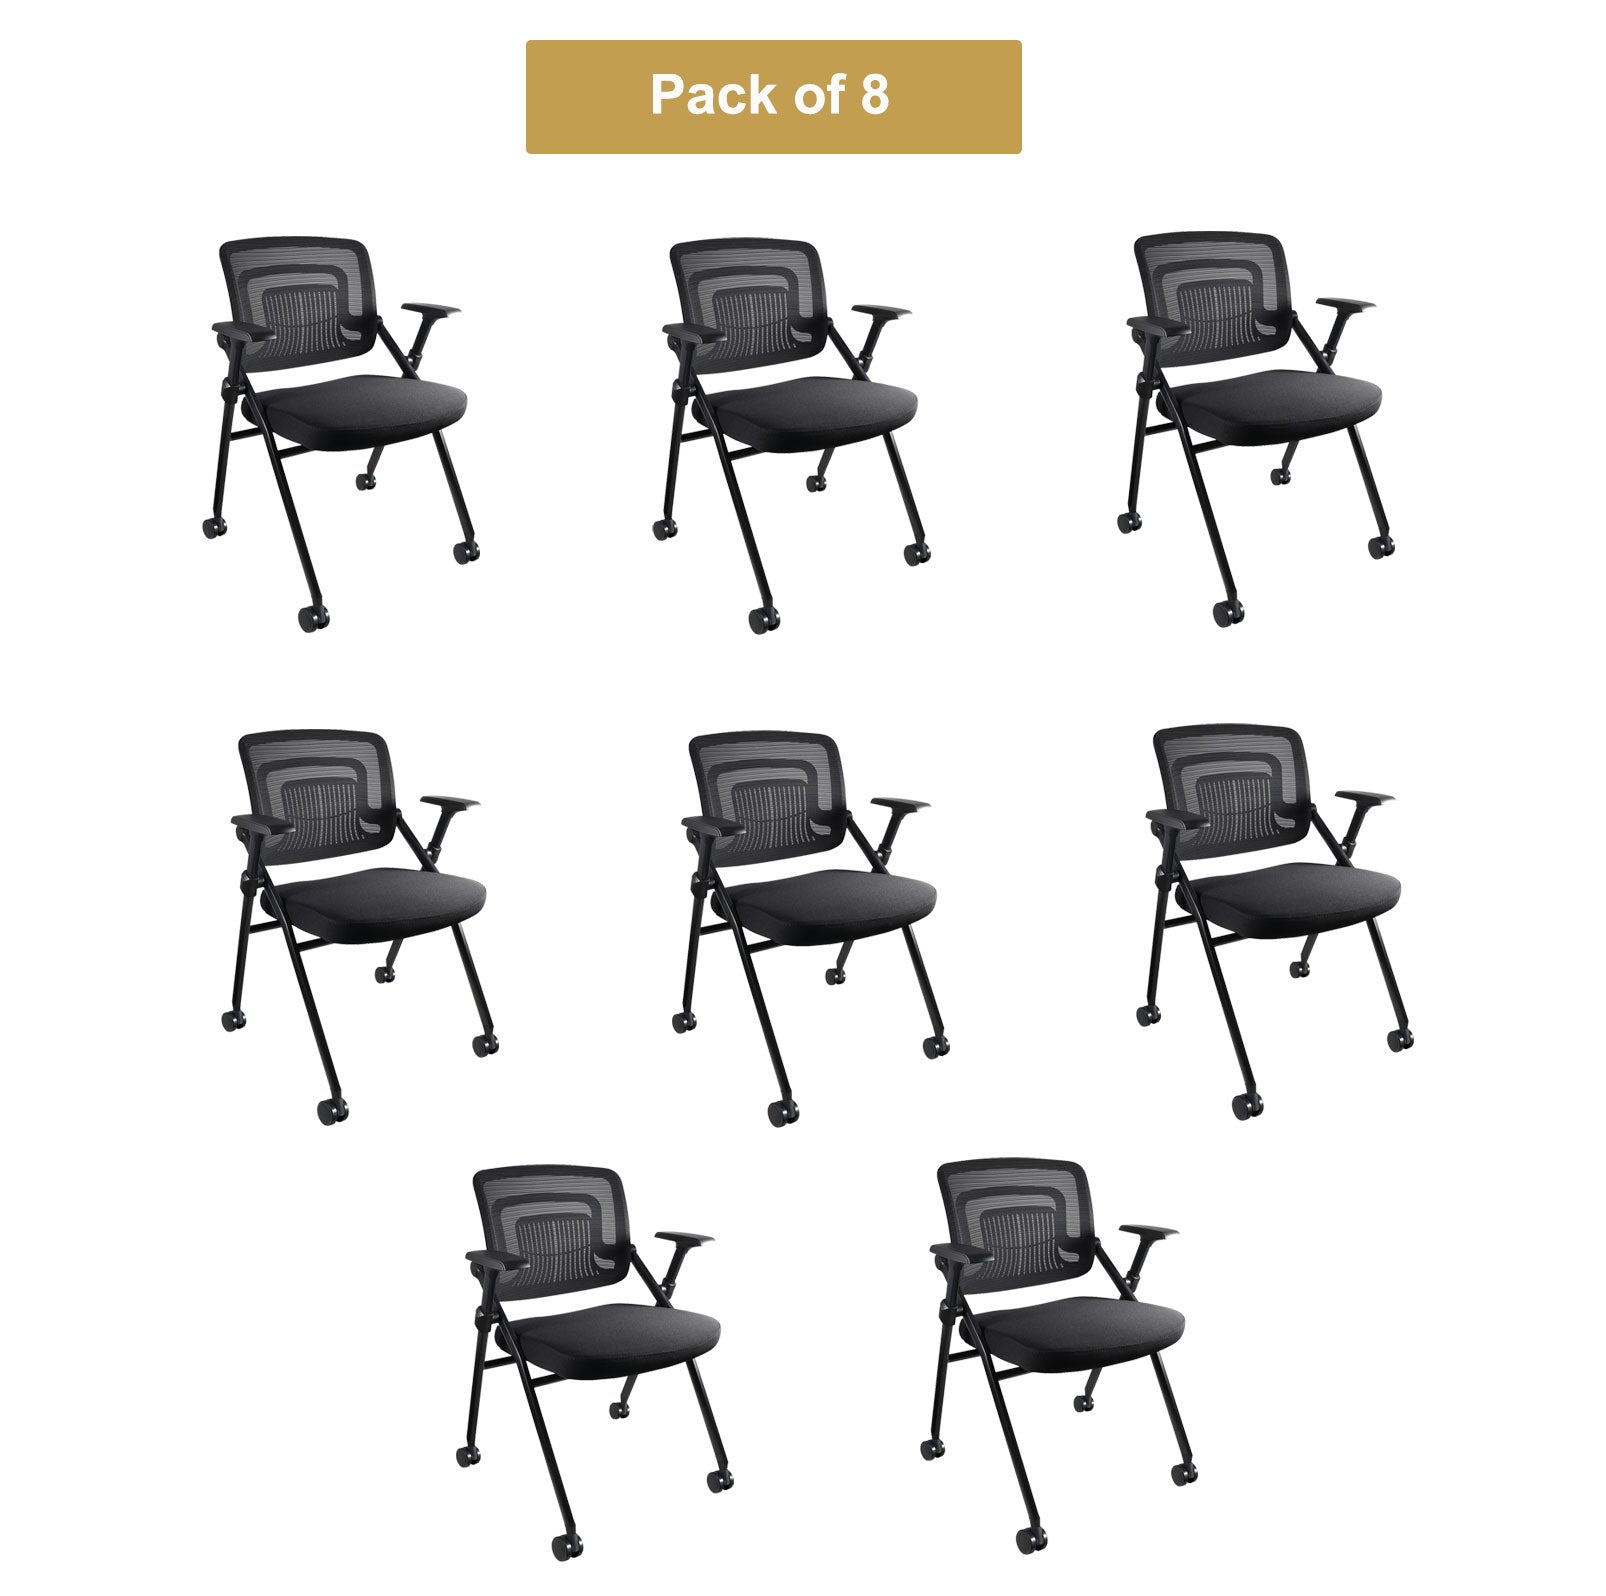 Gutshot Folding Poker Chairs With Wheels